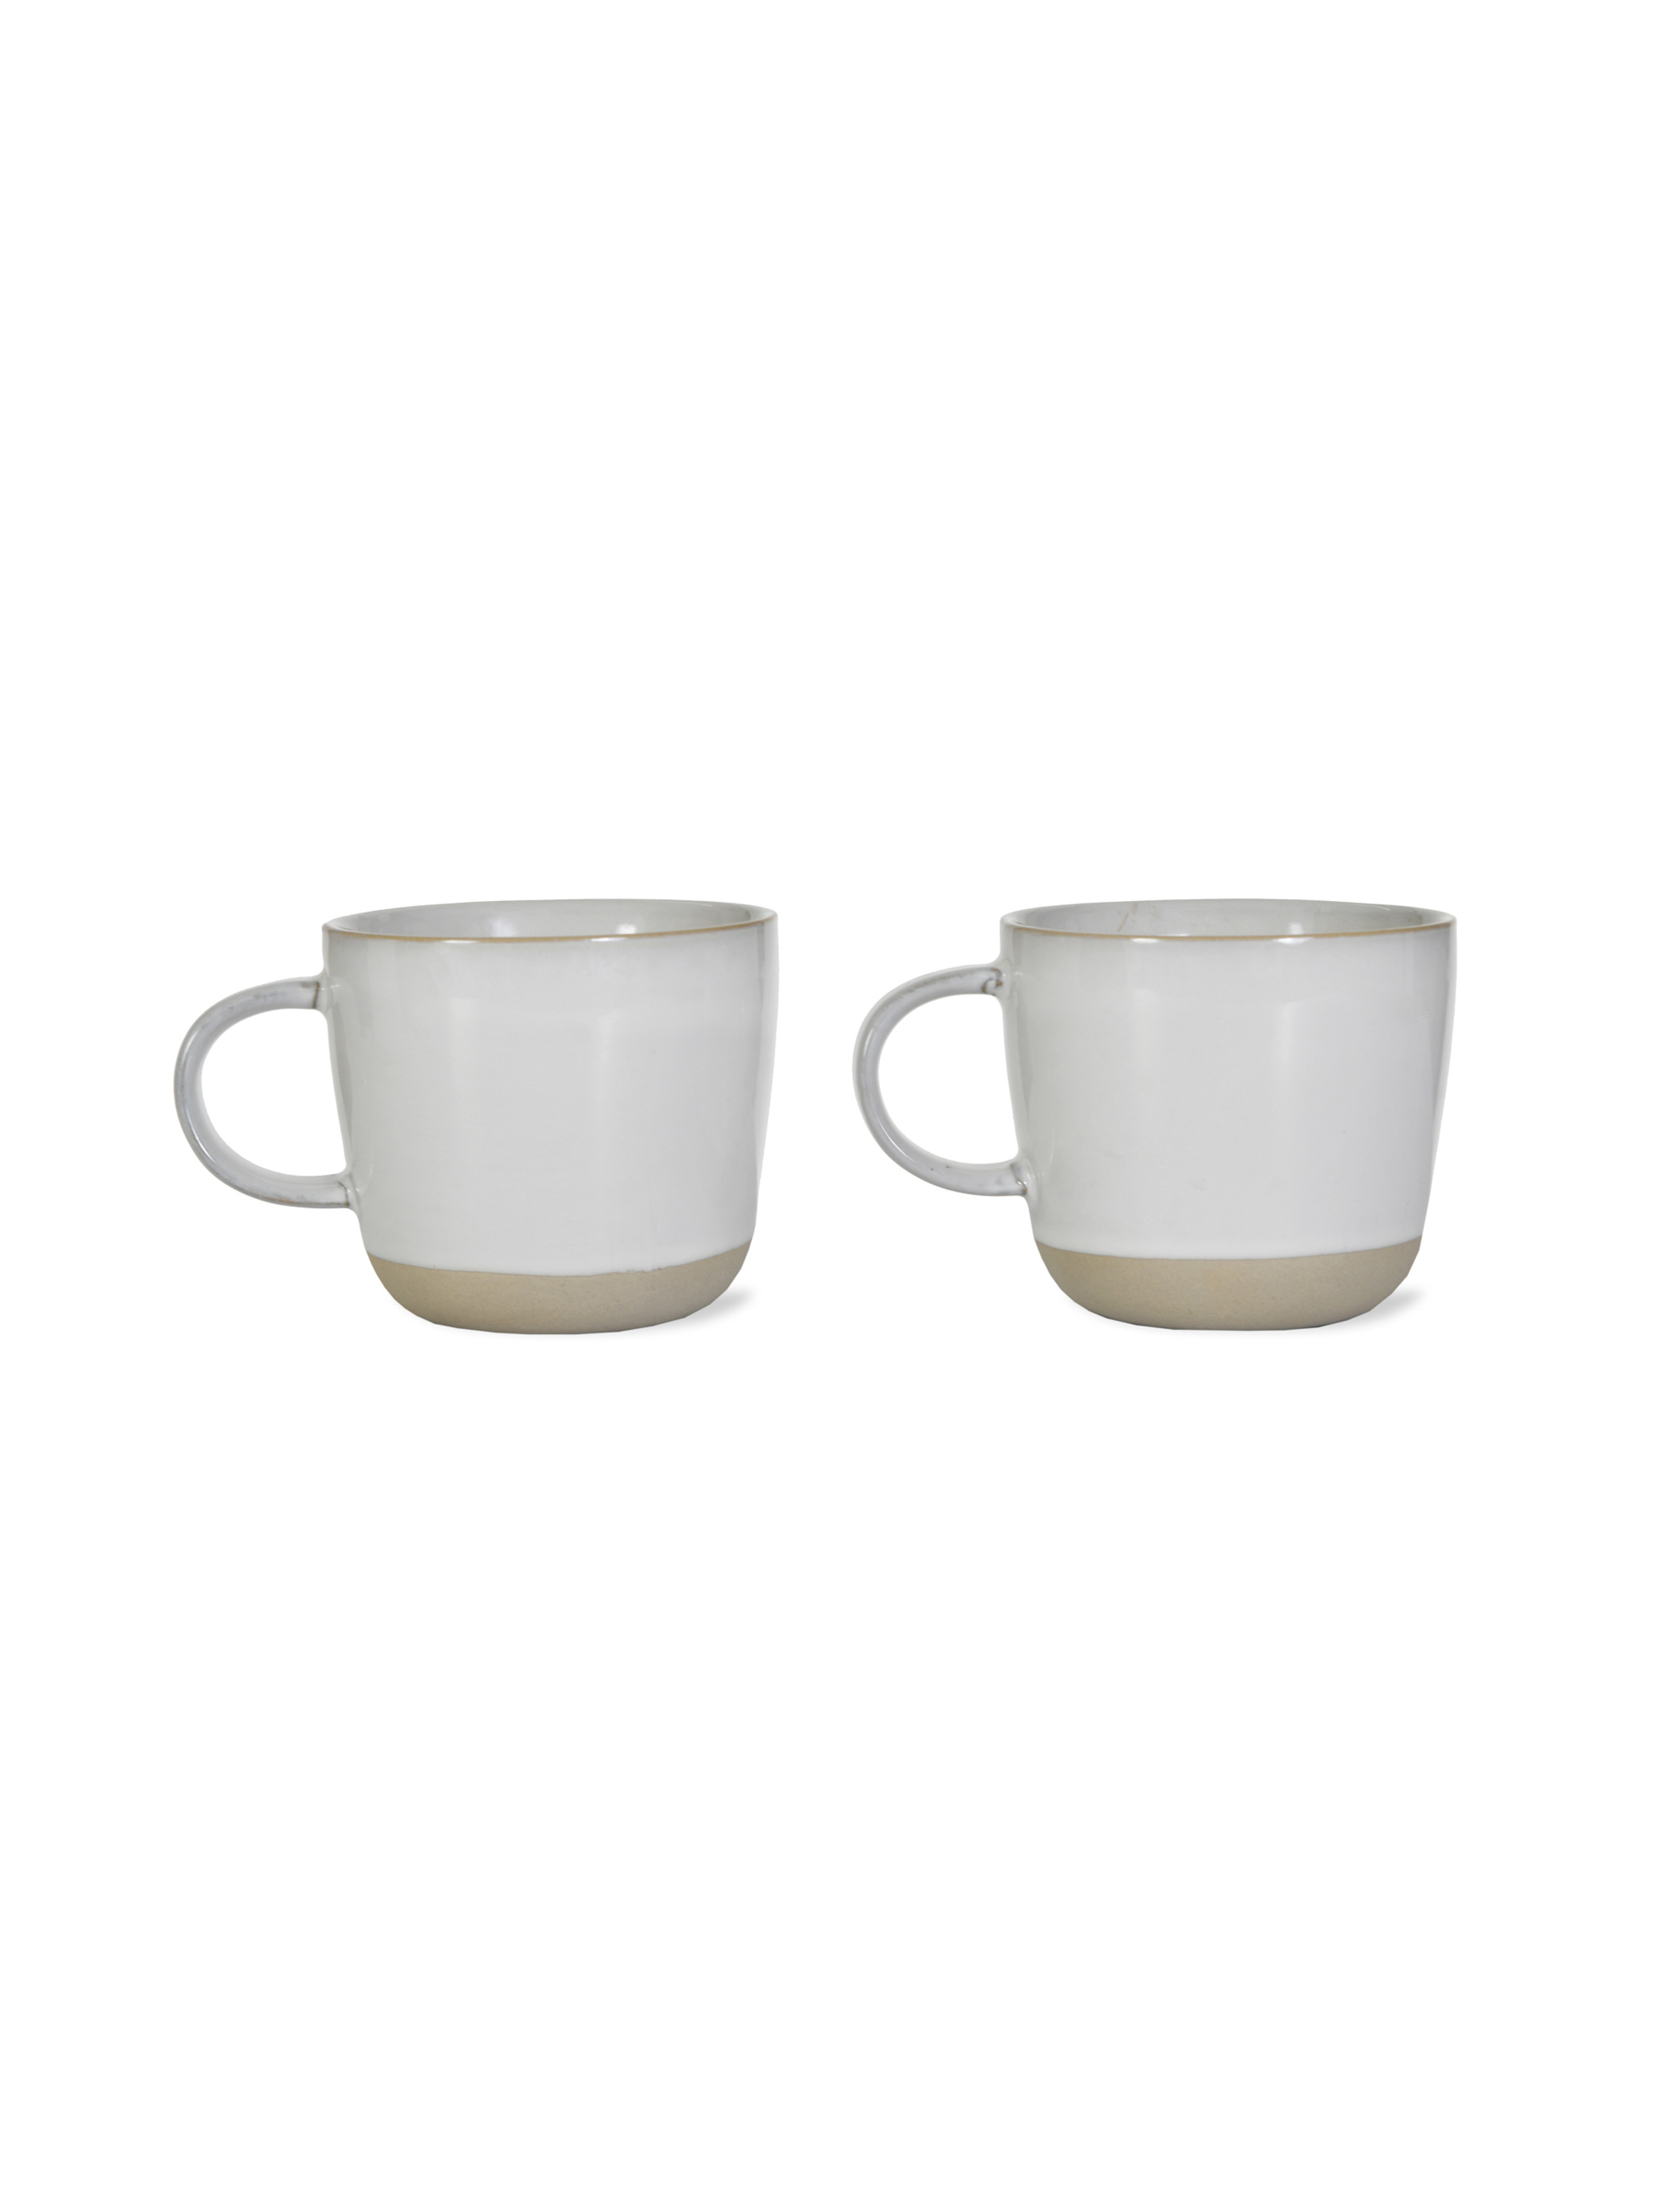 garden-trading-white-pair-of-holwell-stoneware-mugs